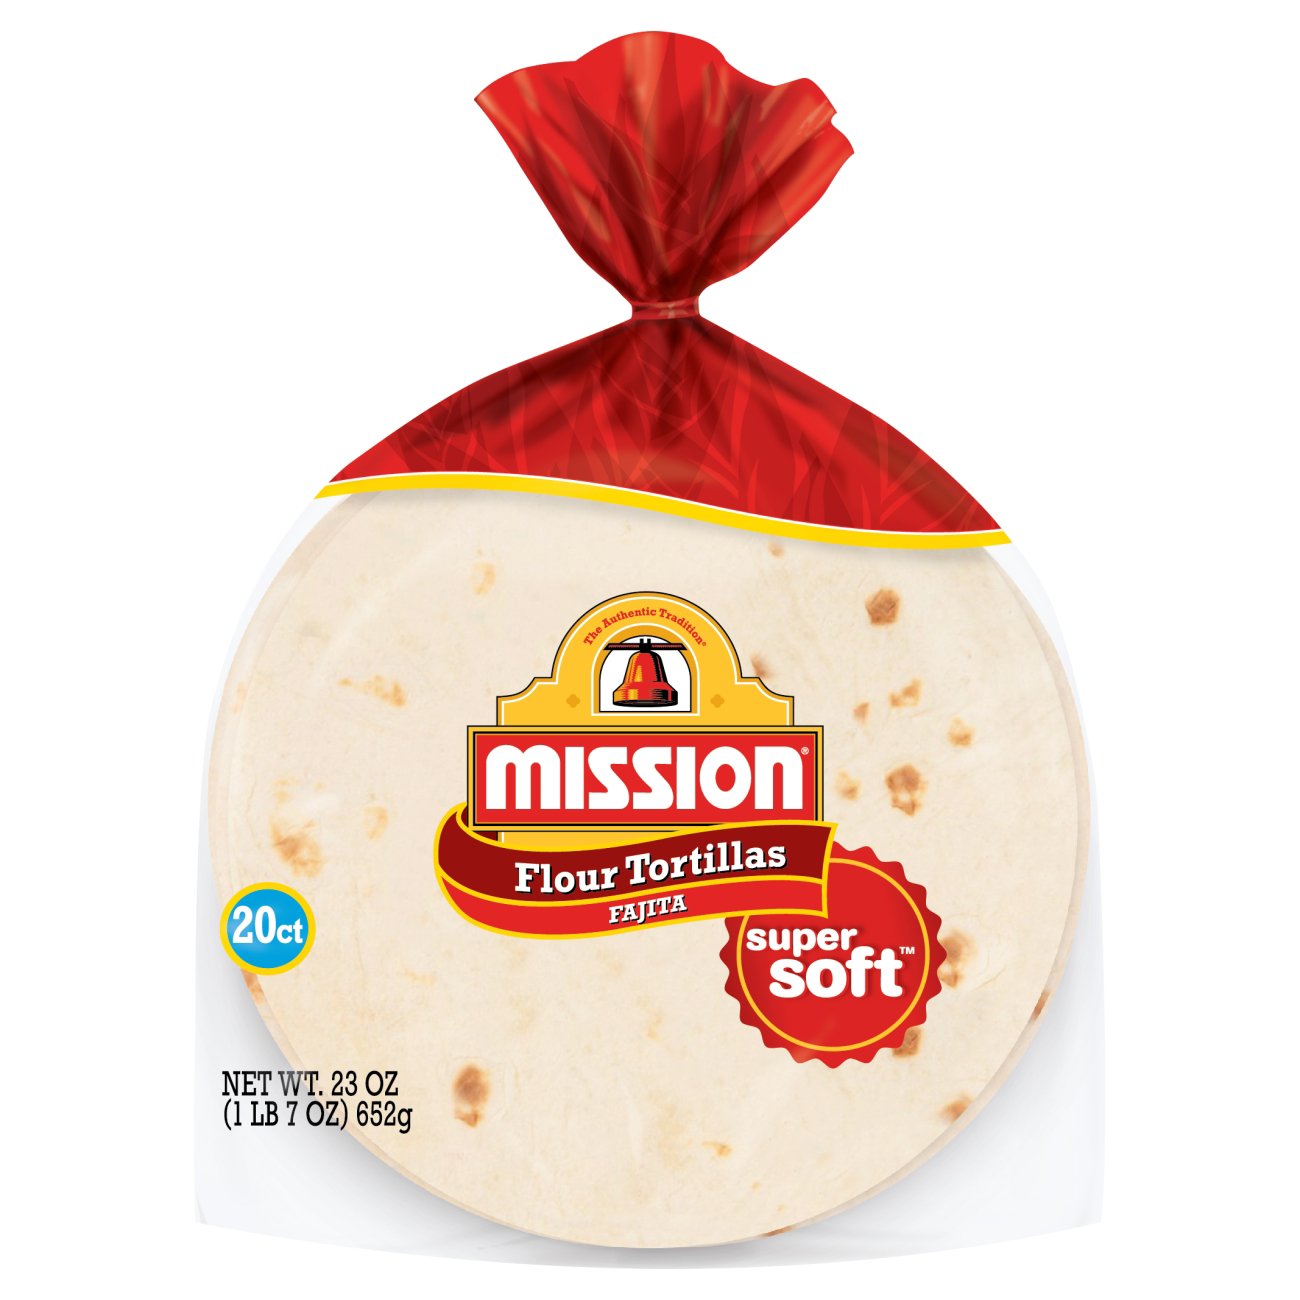 Mission Super Soft Mission Flour Tortillas Fajita Size Shop Tortillas At H E B